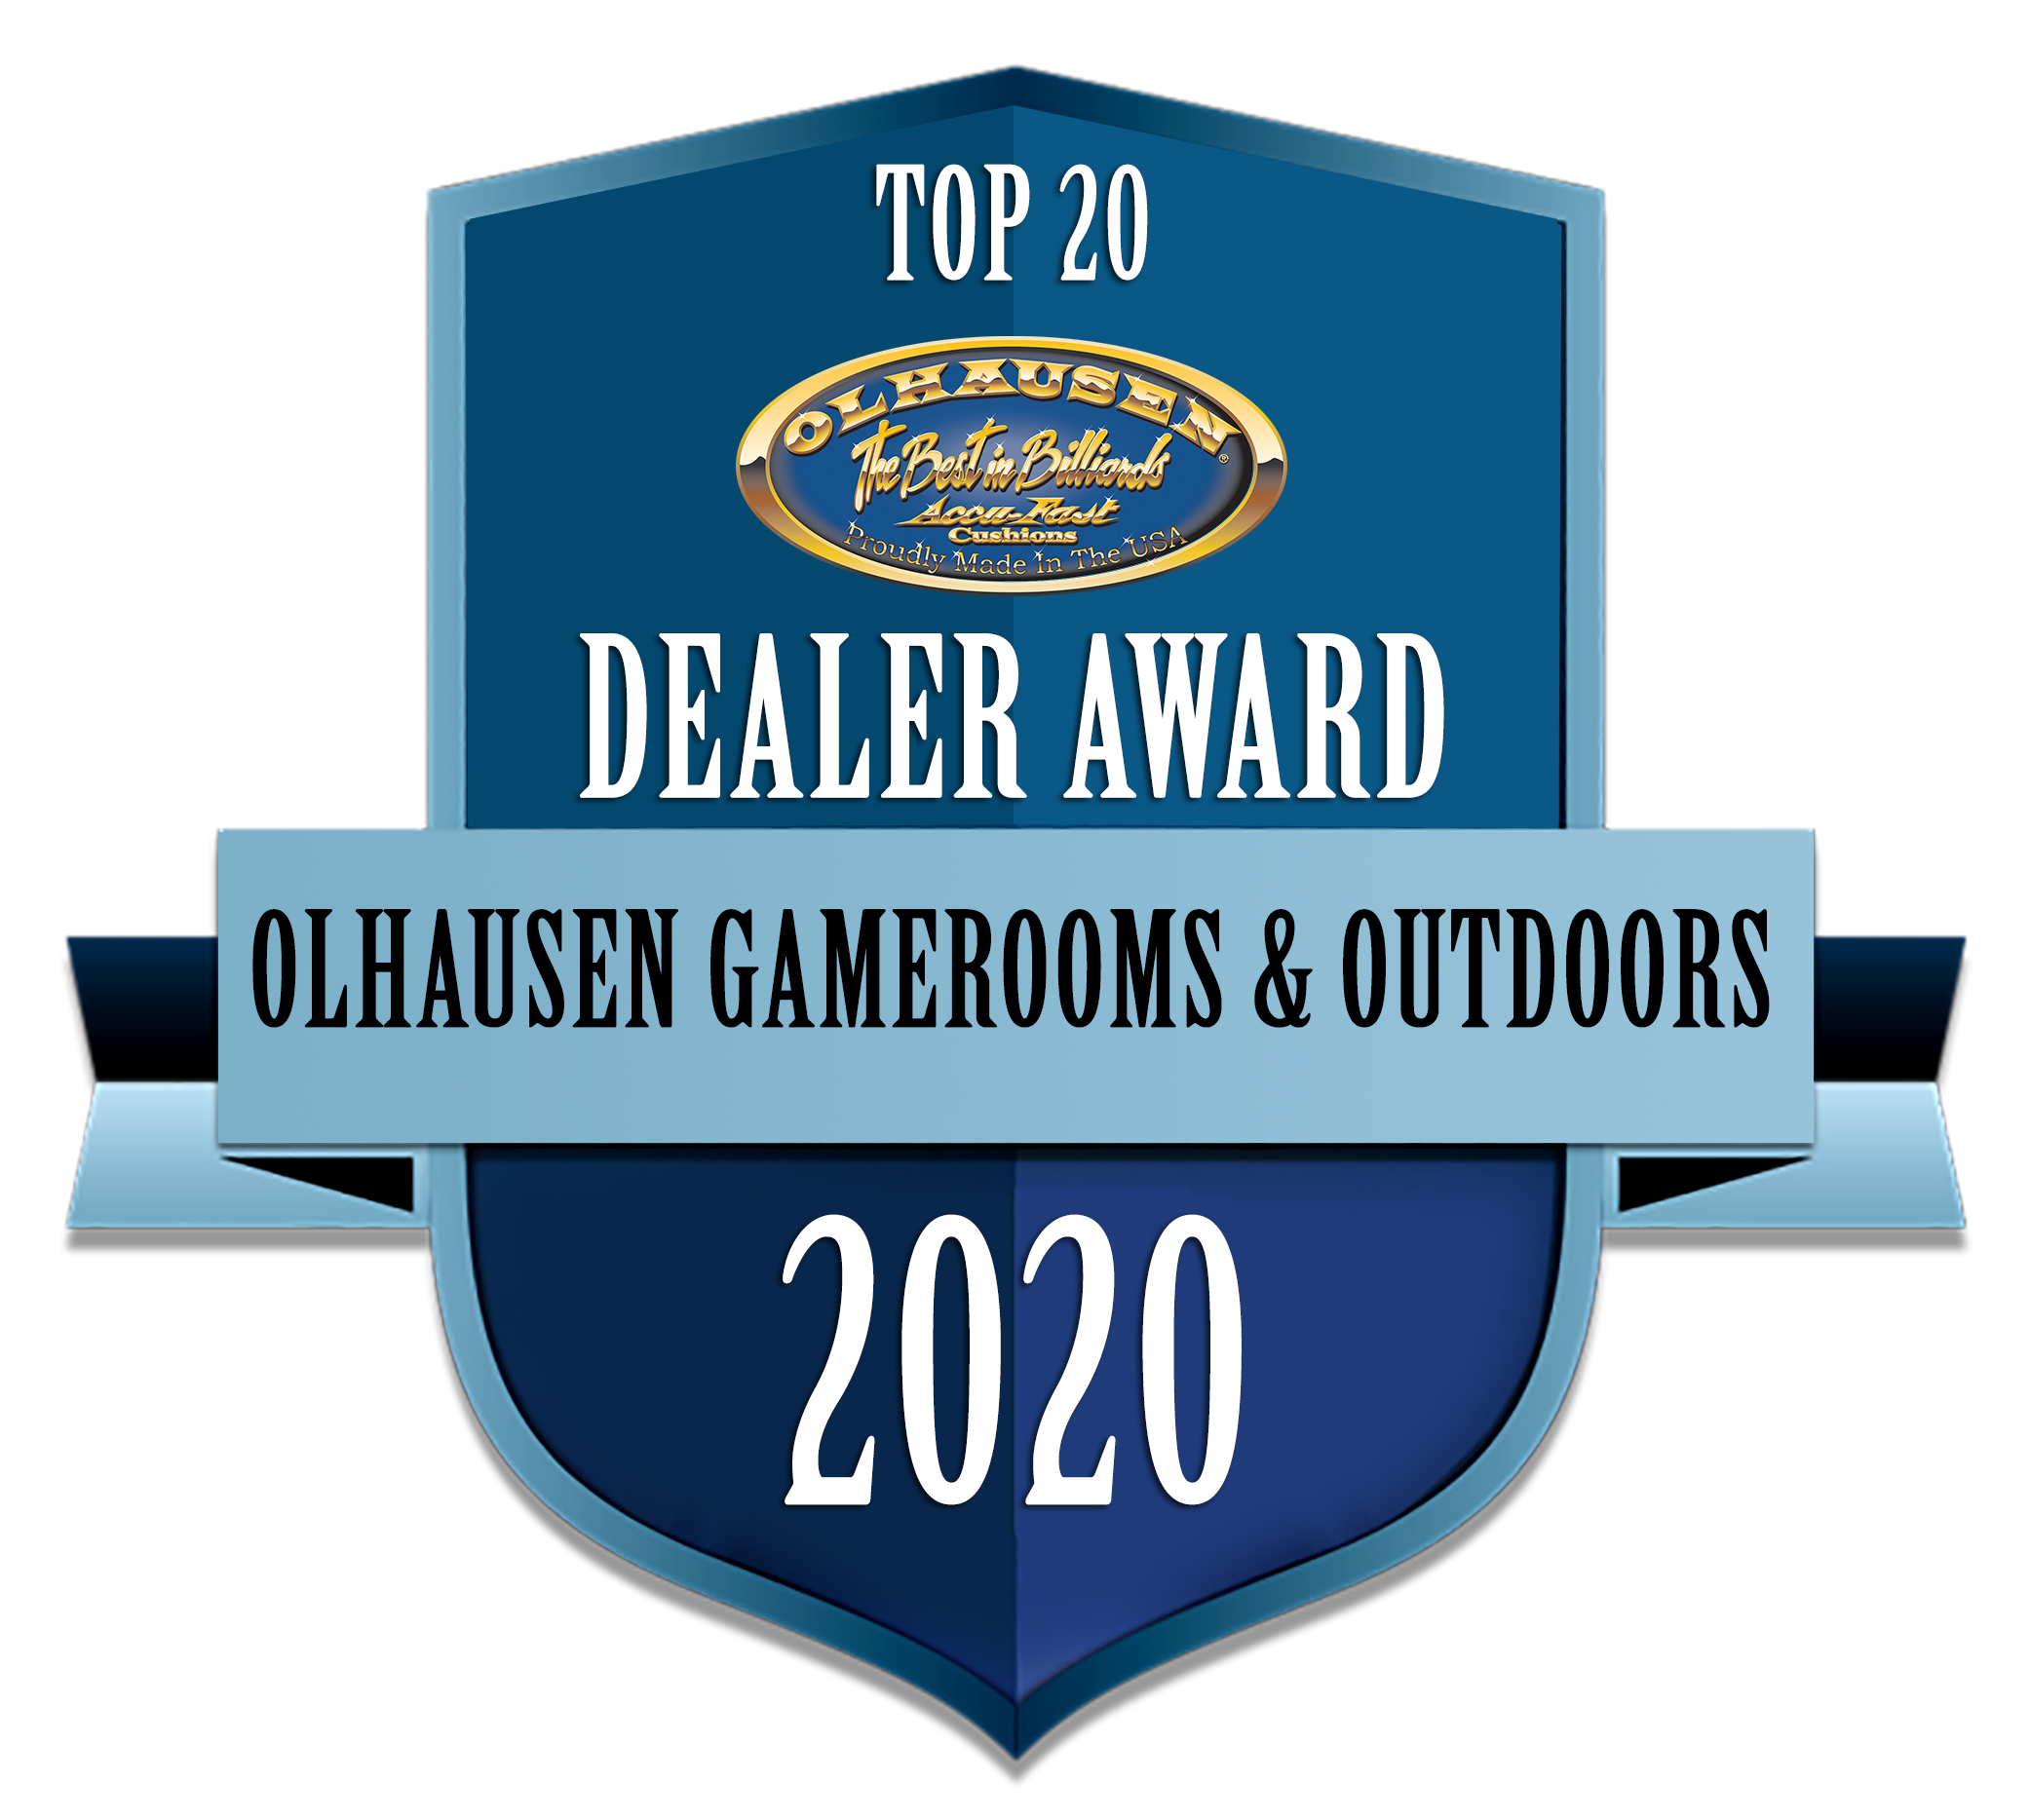 Top 20 Dealer Award Olhausen